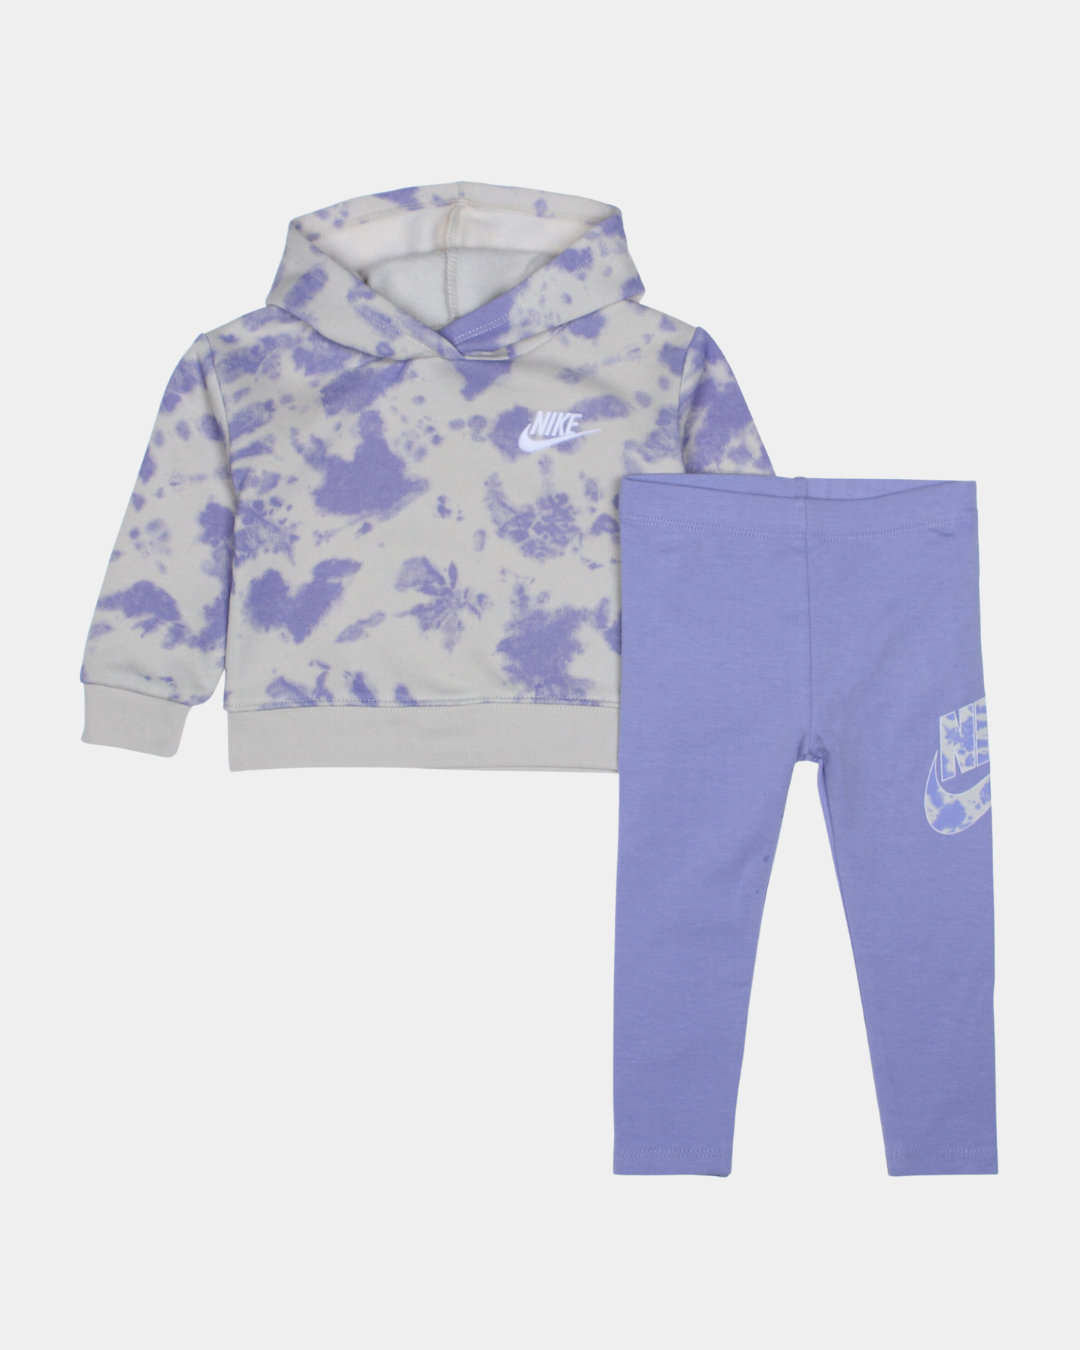 Nike Baby Set - White/Purple – Footkorner